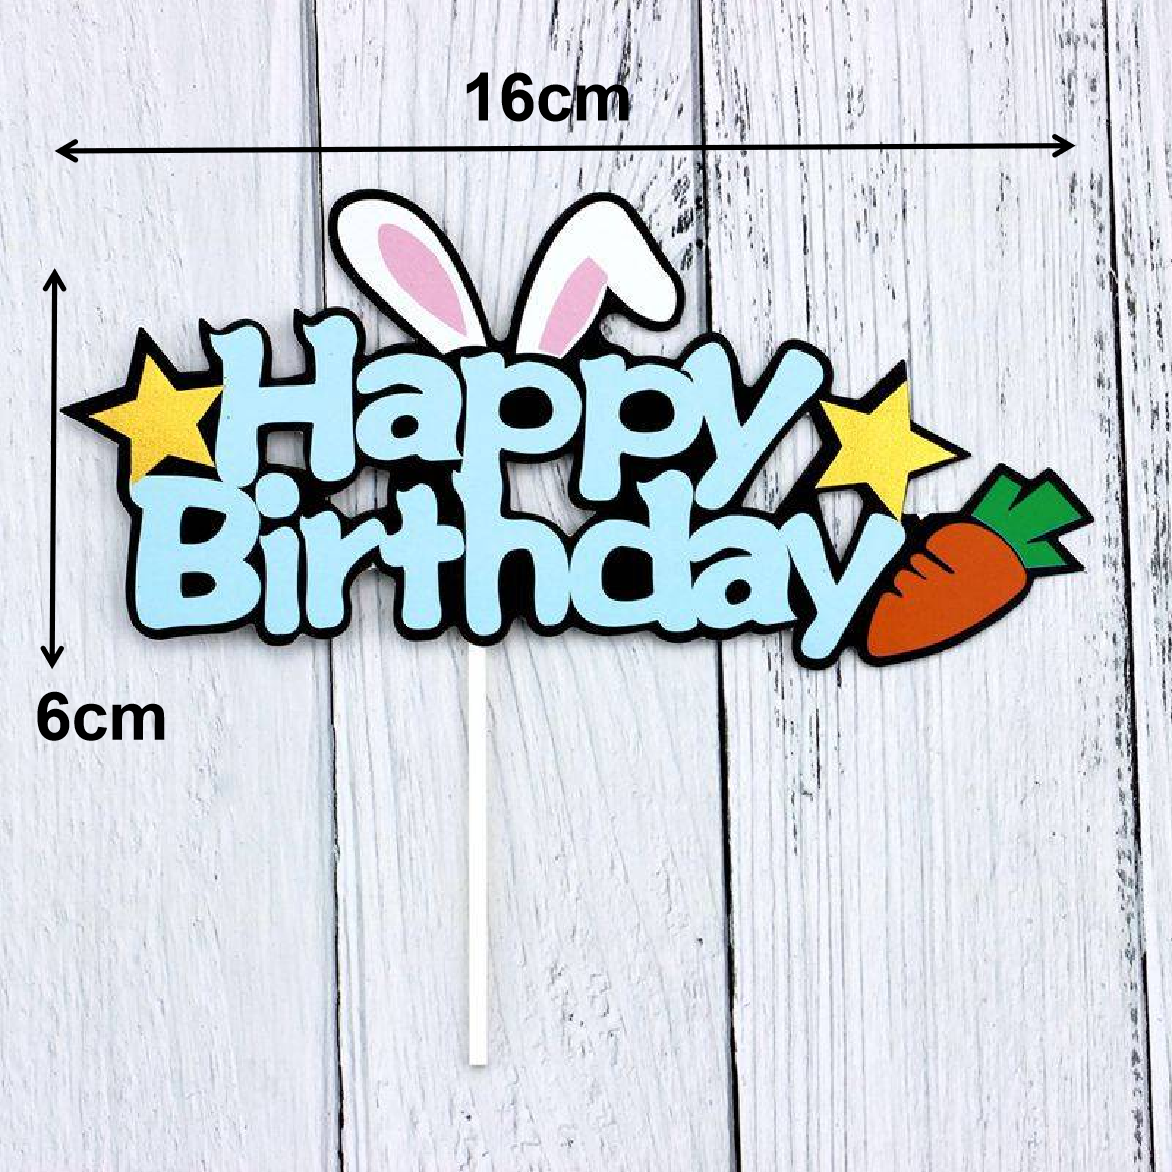 Cake Topper Cake Decoration - 'Happy Birthday'- Bunny -blue - Rampant Coffee Company